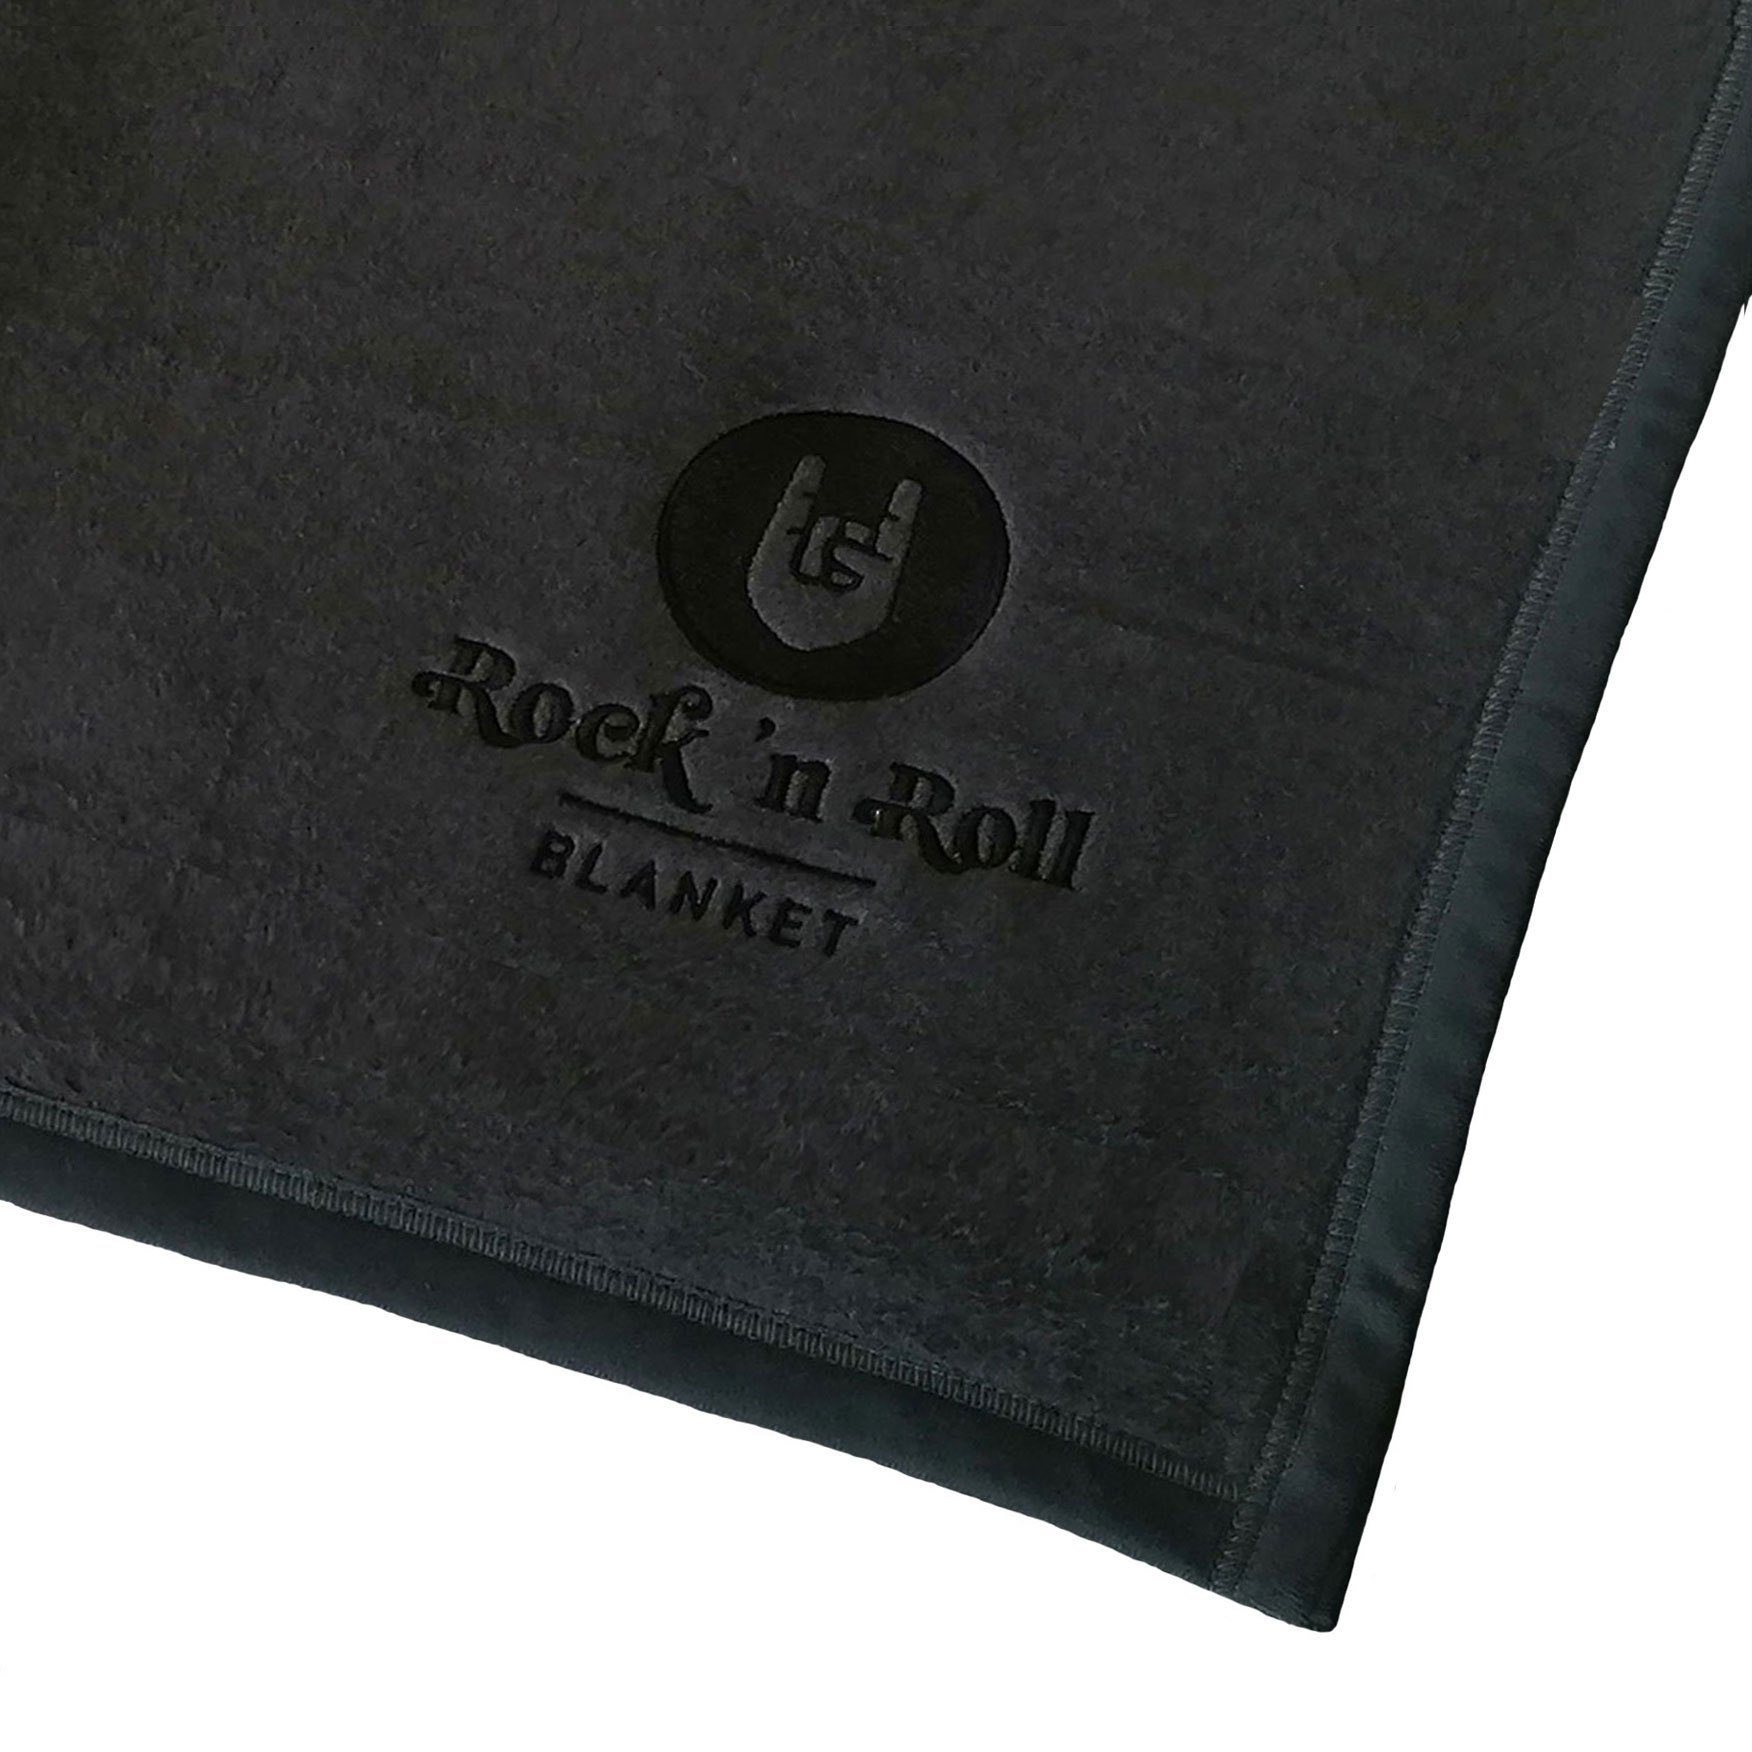 Rock Rock Sofadecke Blanket Wohndecke `n anthrazit Uni Blanket, cm, `n Biederlack Roll Roll Wohndecke 150x200